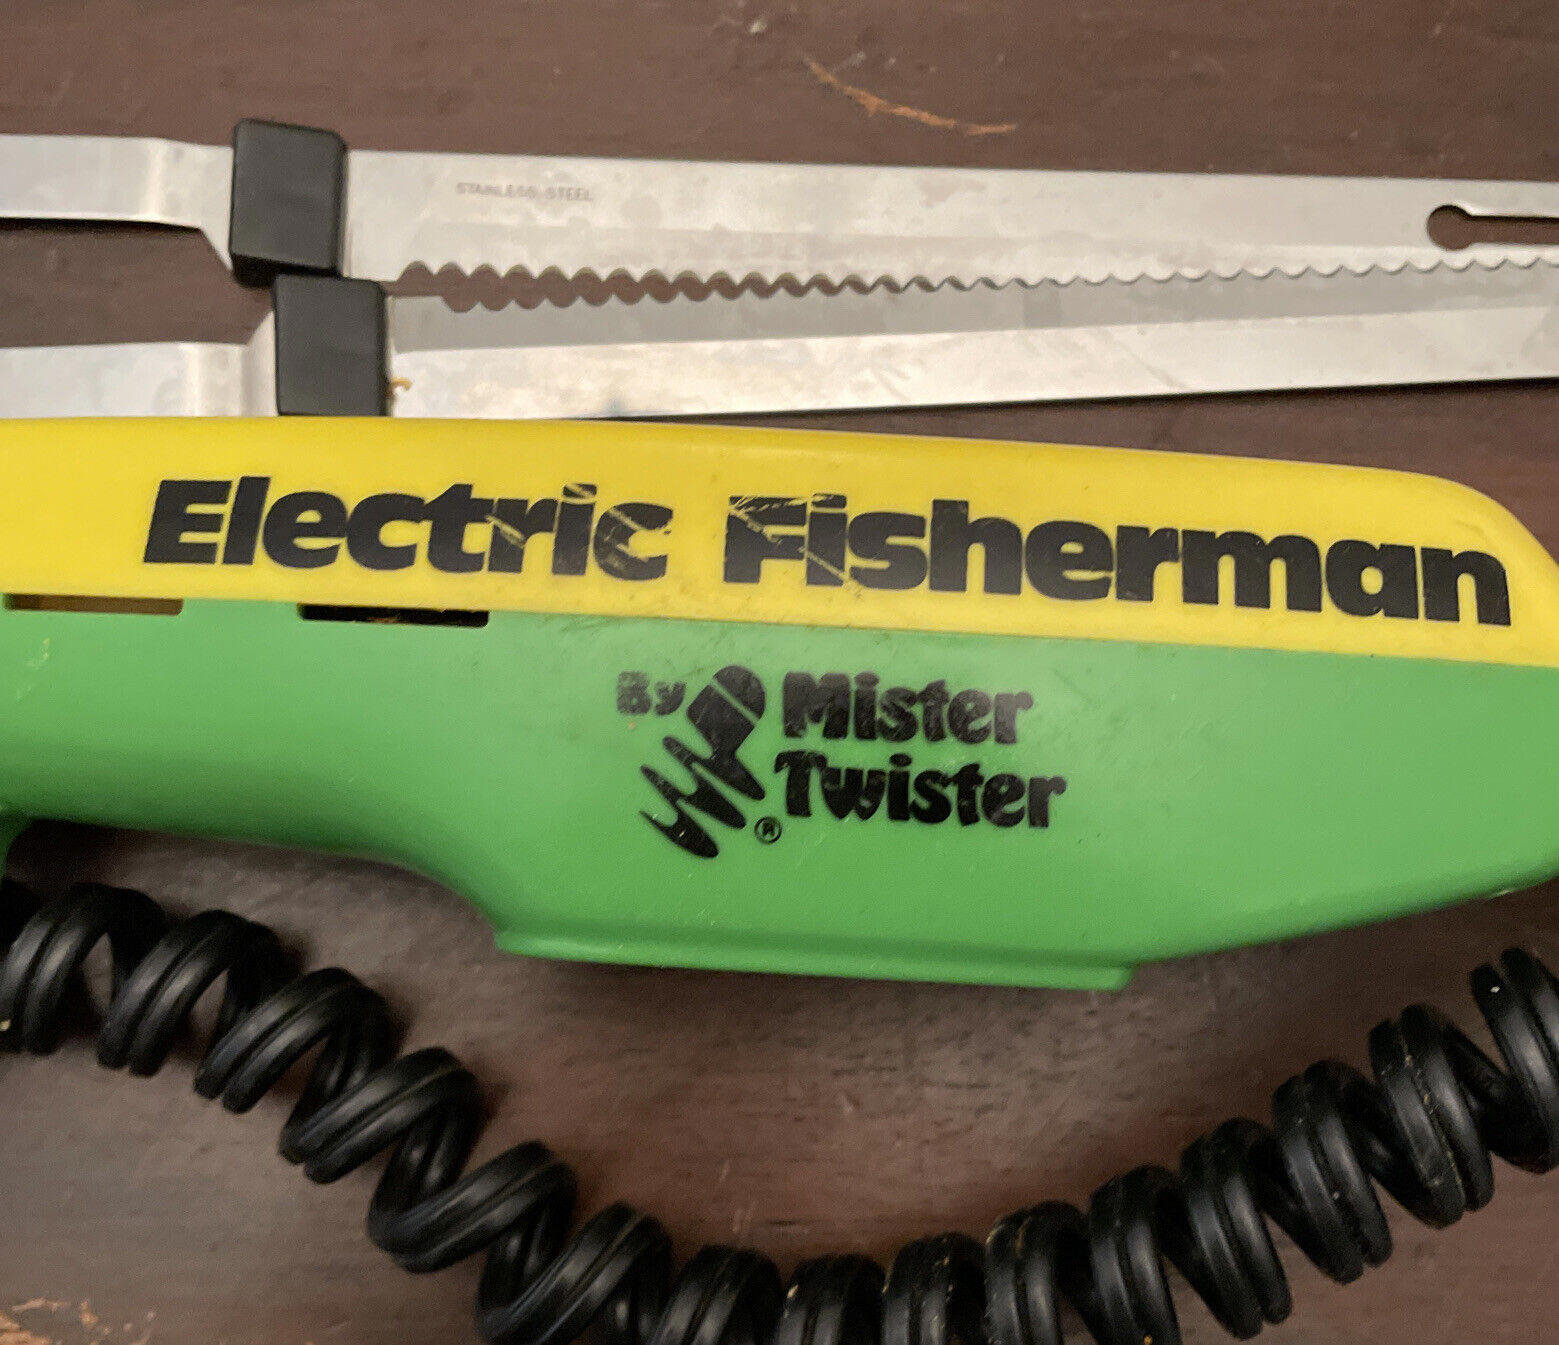 Mister Twister Electric Fisherman Fishing Filet Knife MT-1201